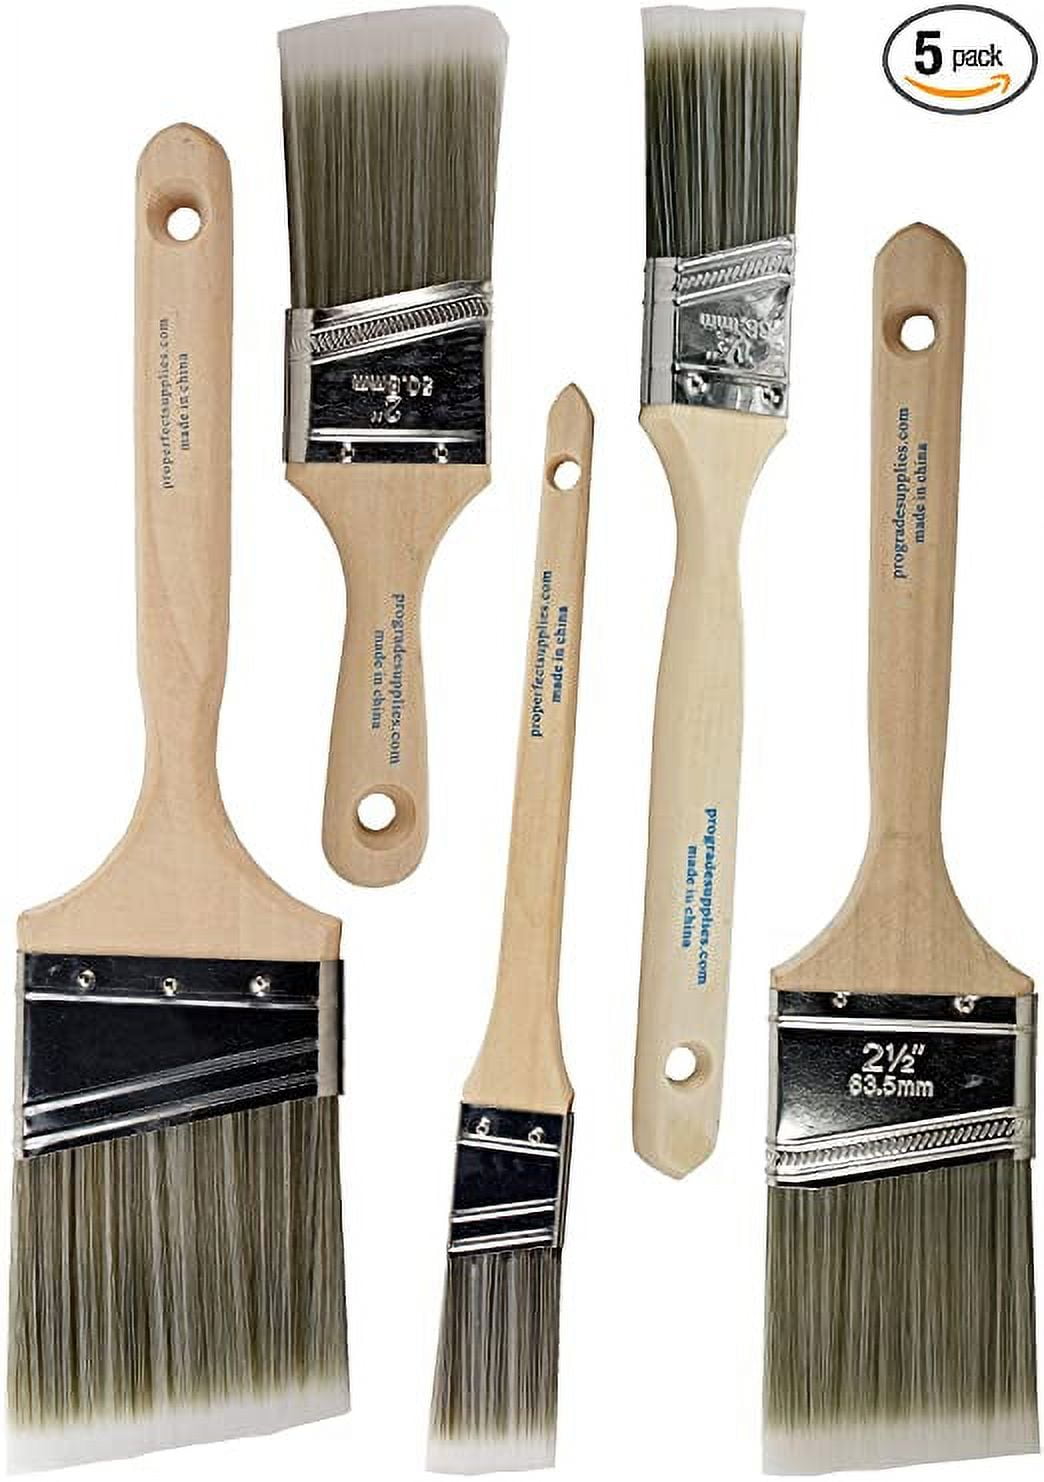 Pro Grade Premium Paint Brushes, 1 inch Angle Sash, 3 Pack Paint Brush Set